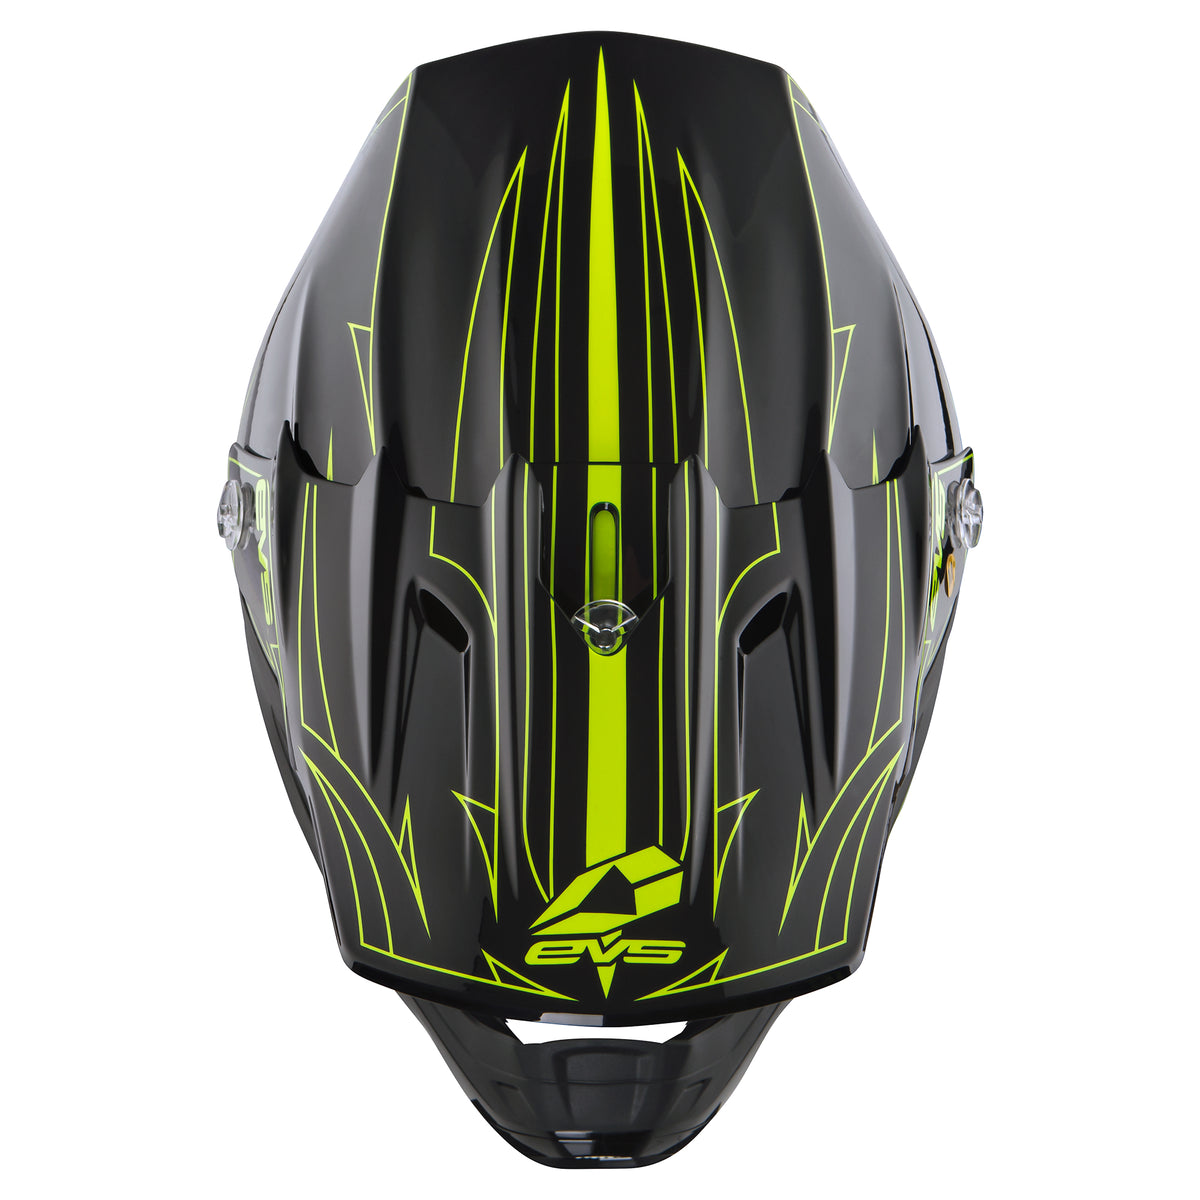 T5 Helmet - Pinner HiViz - EVS Sports